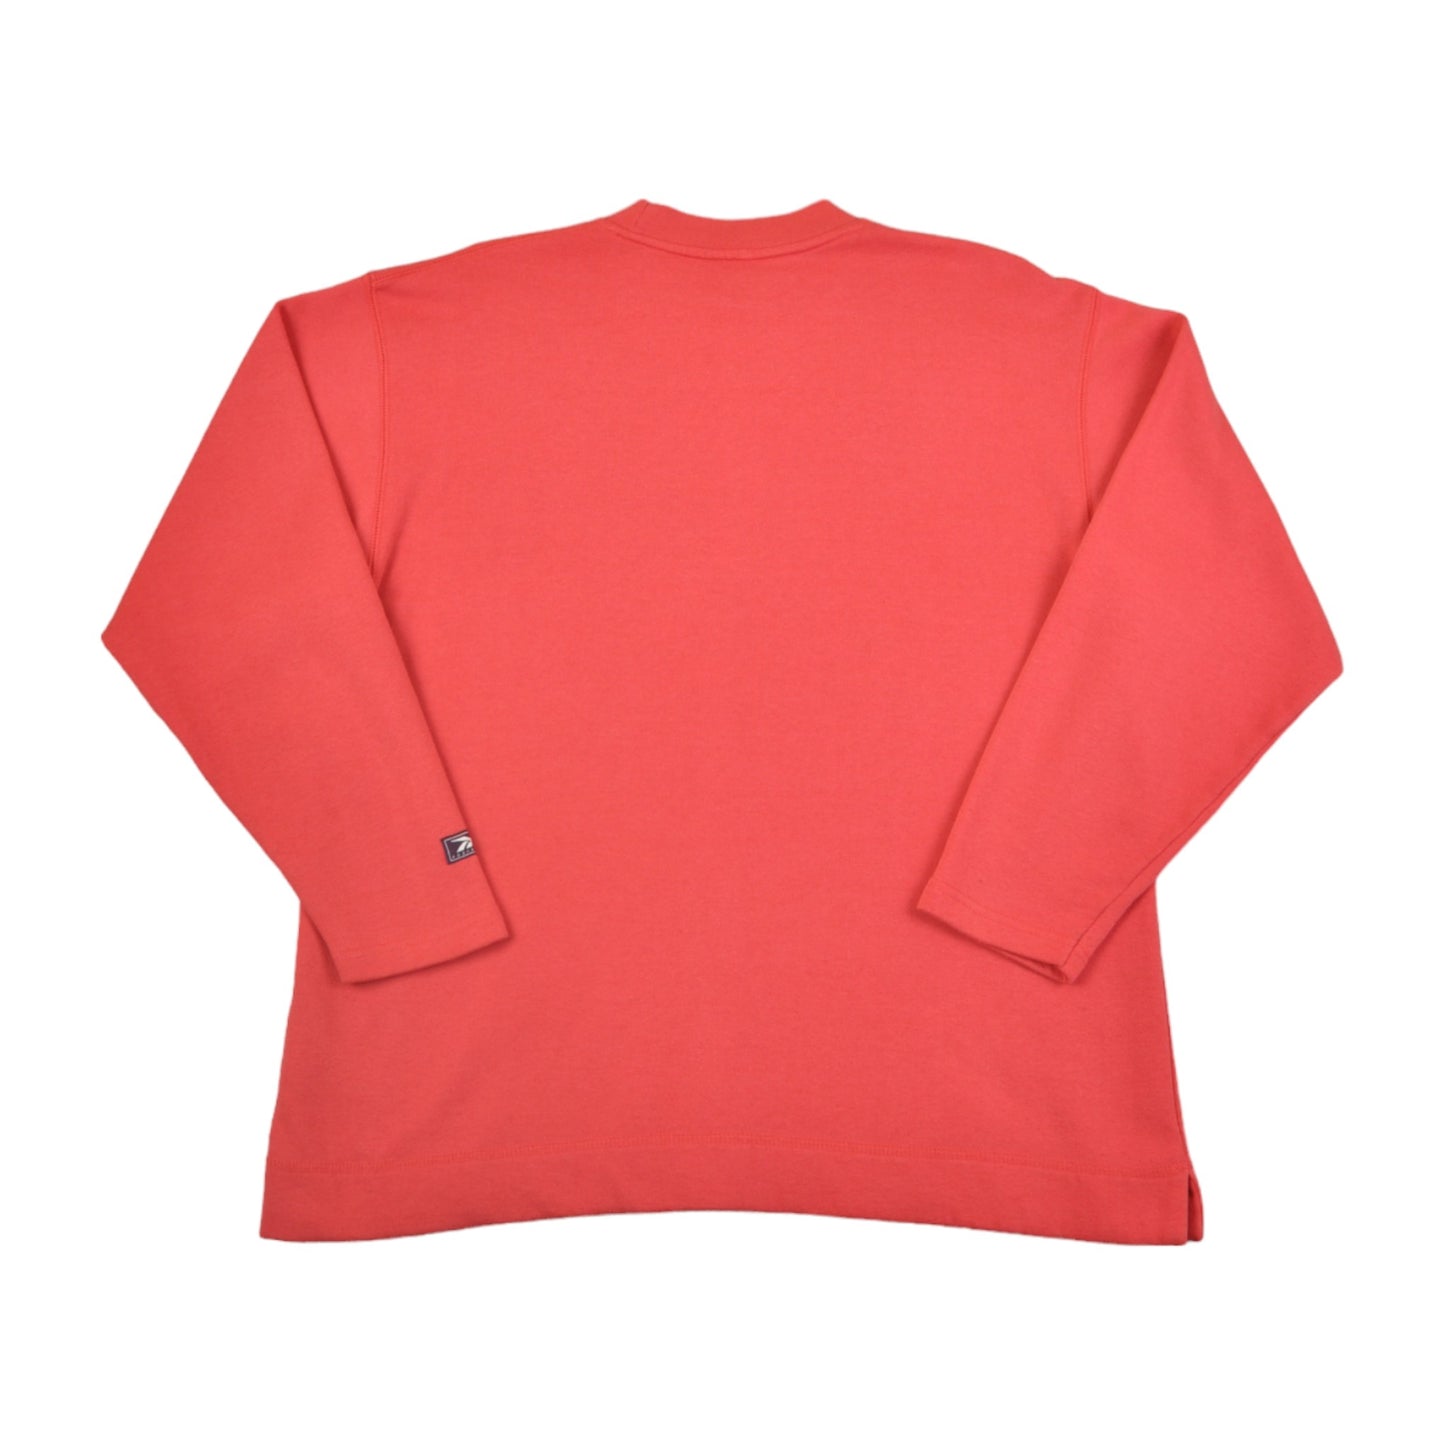 Vintage Reebok Crew Neck Sweatshirt Pink Ladies Medium